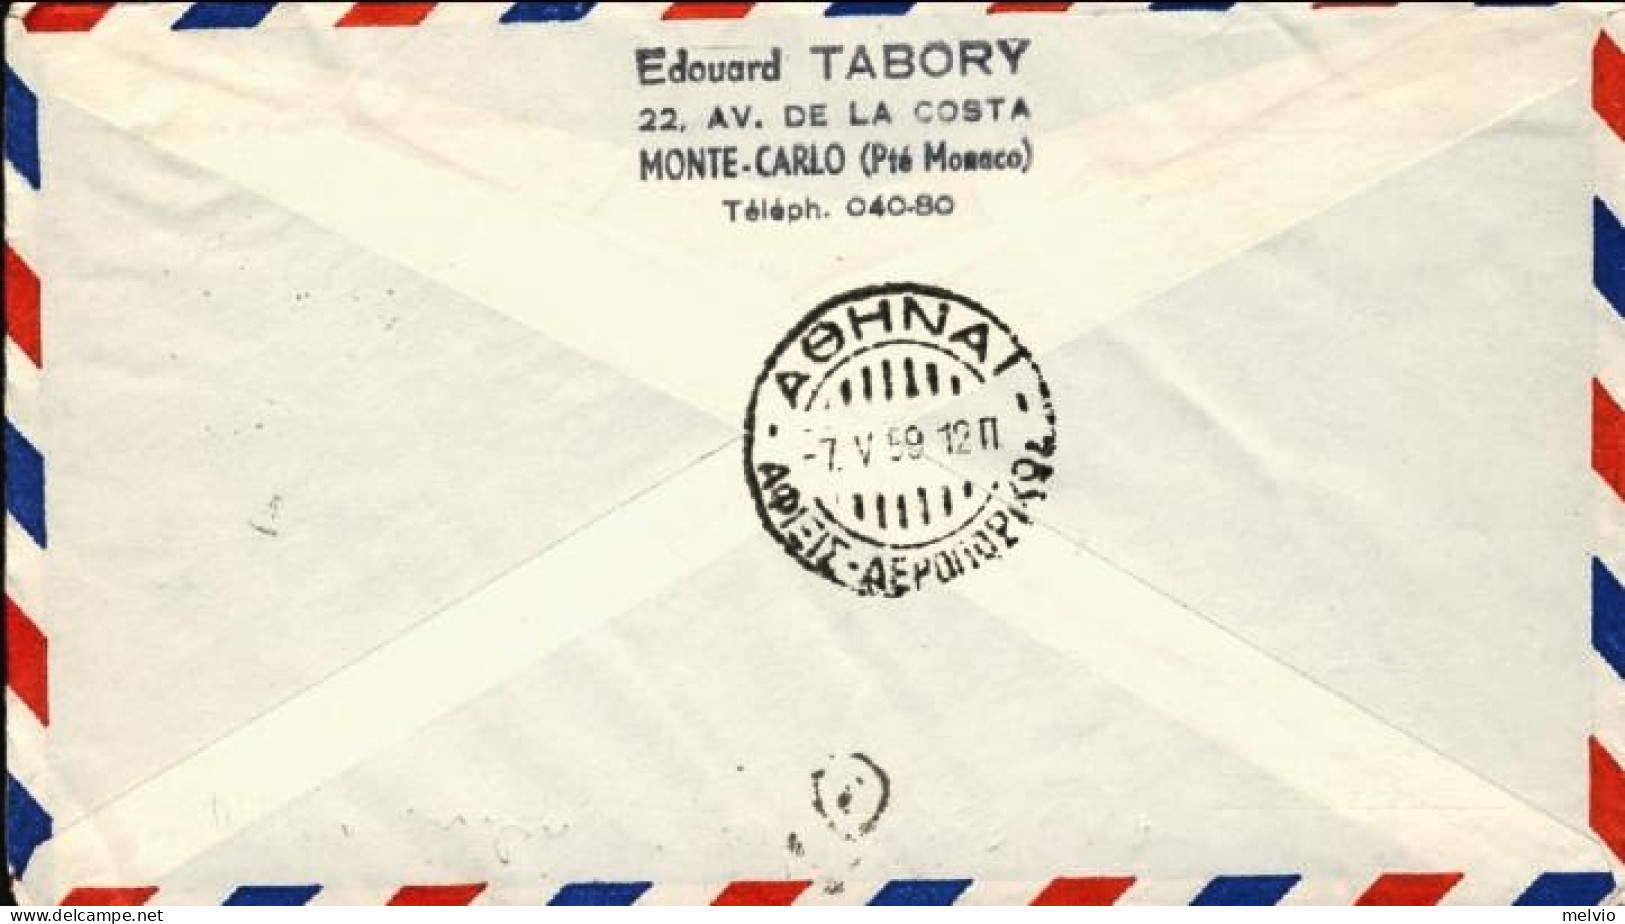 1959-Monaco Bollo Viola I^volo Air France Caravelle Montecarlo-Atene Del 6 Maggi - Cartas & Documentos